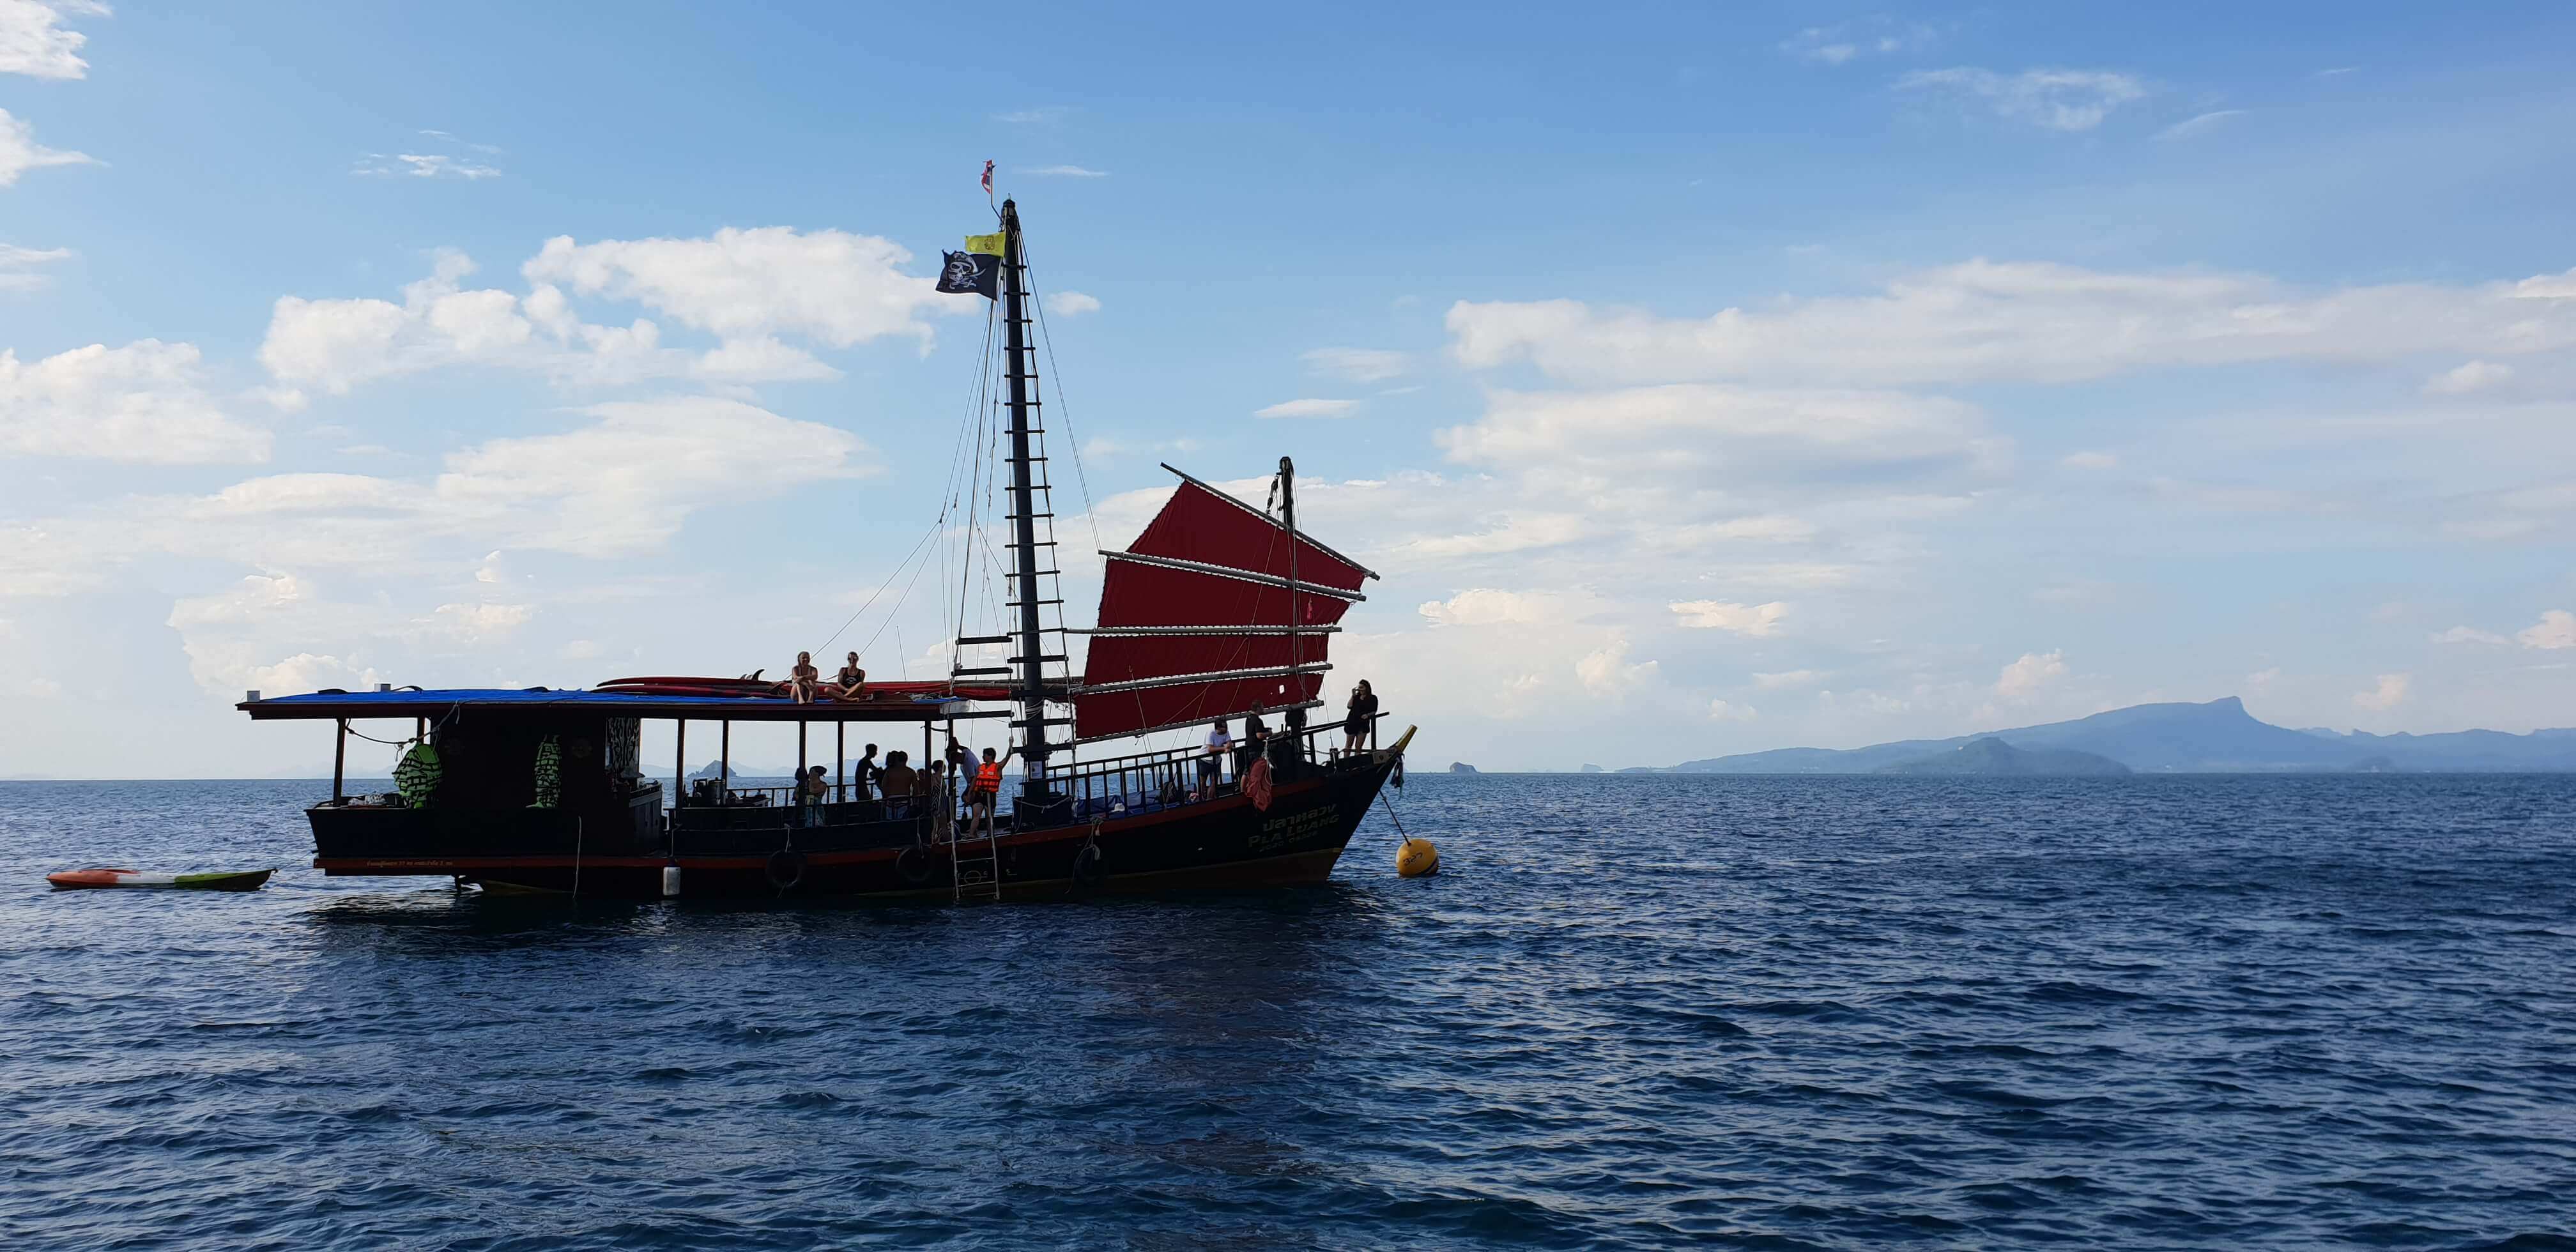 Krabi Sunset cruise involves cruising on a pirate style ship